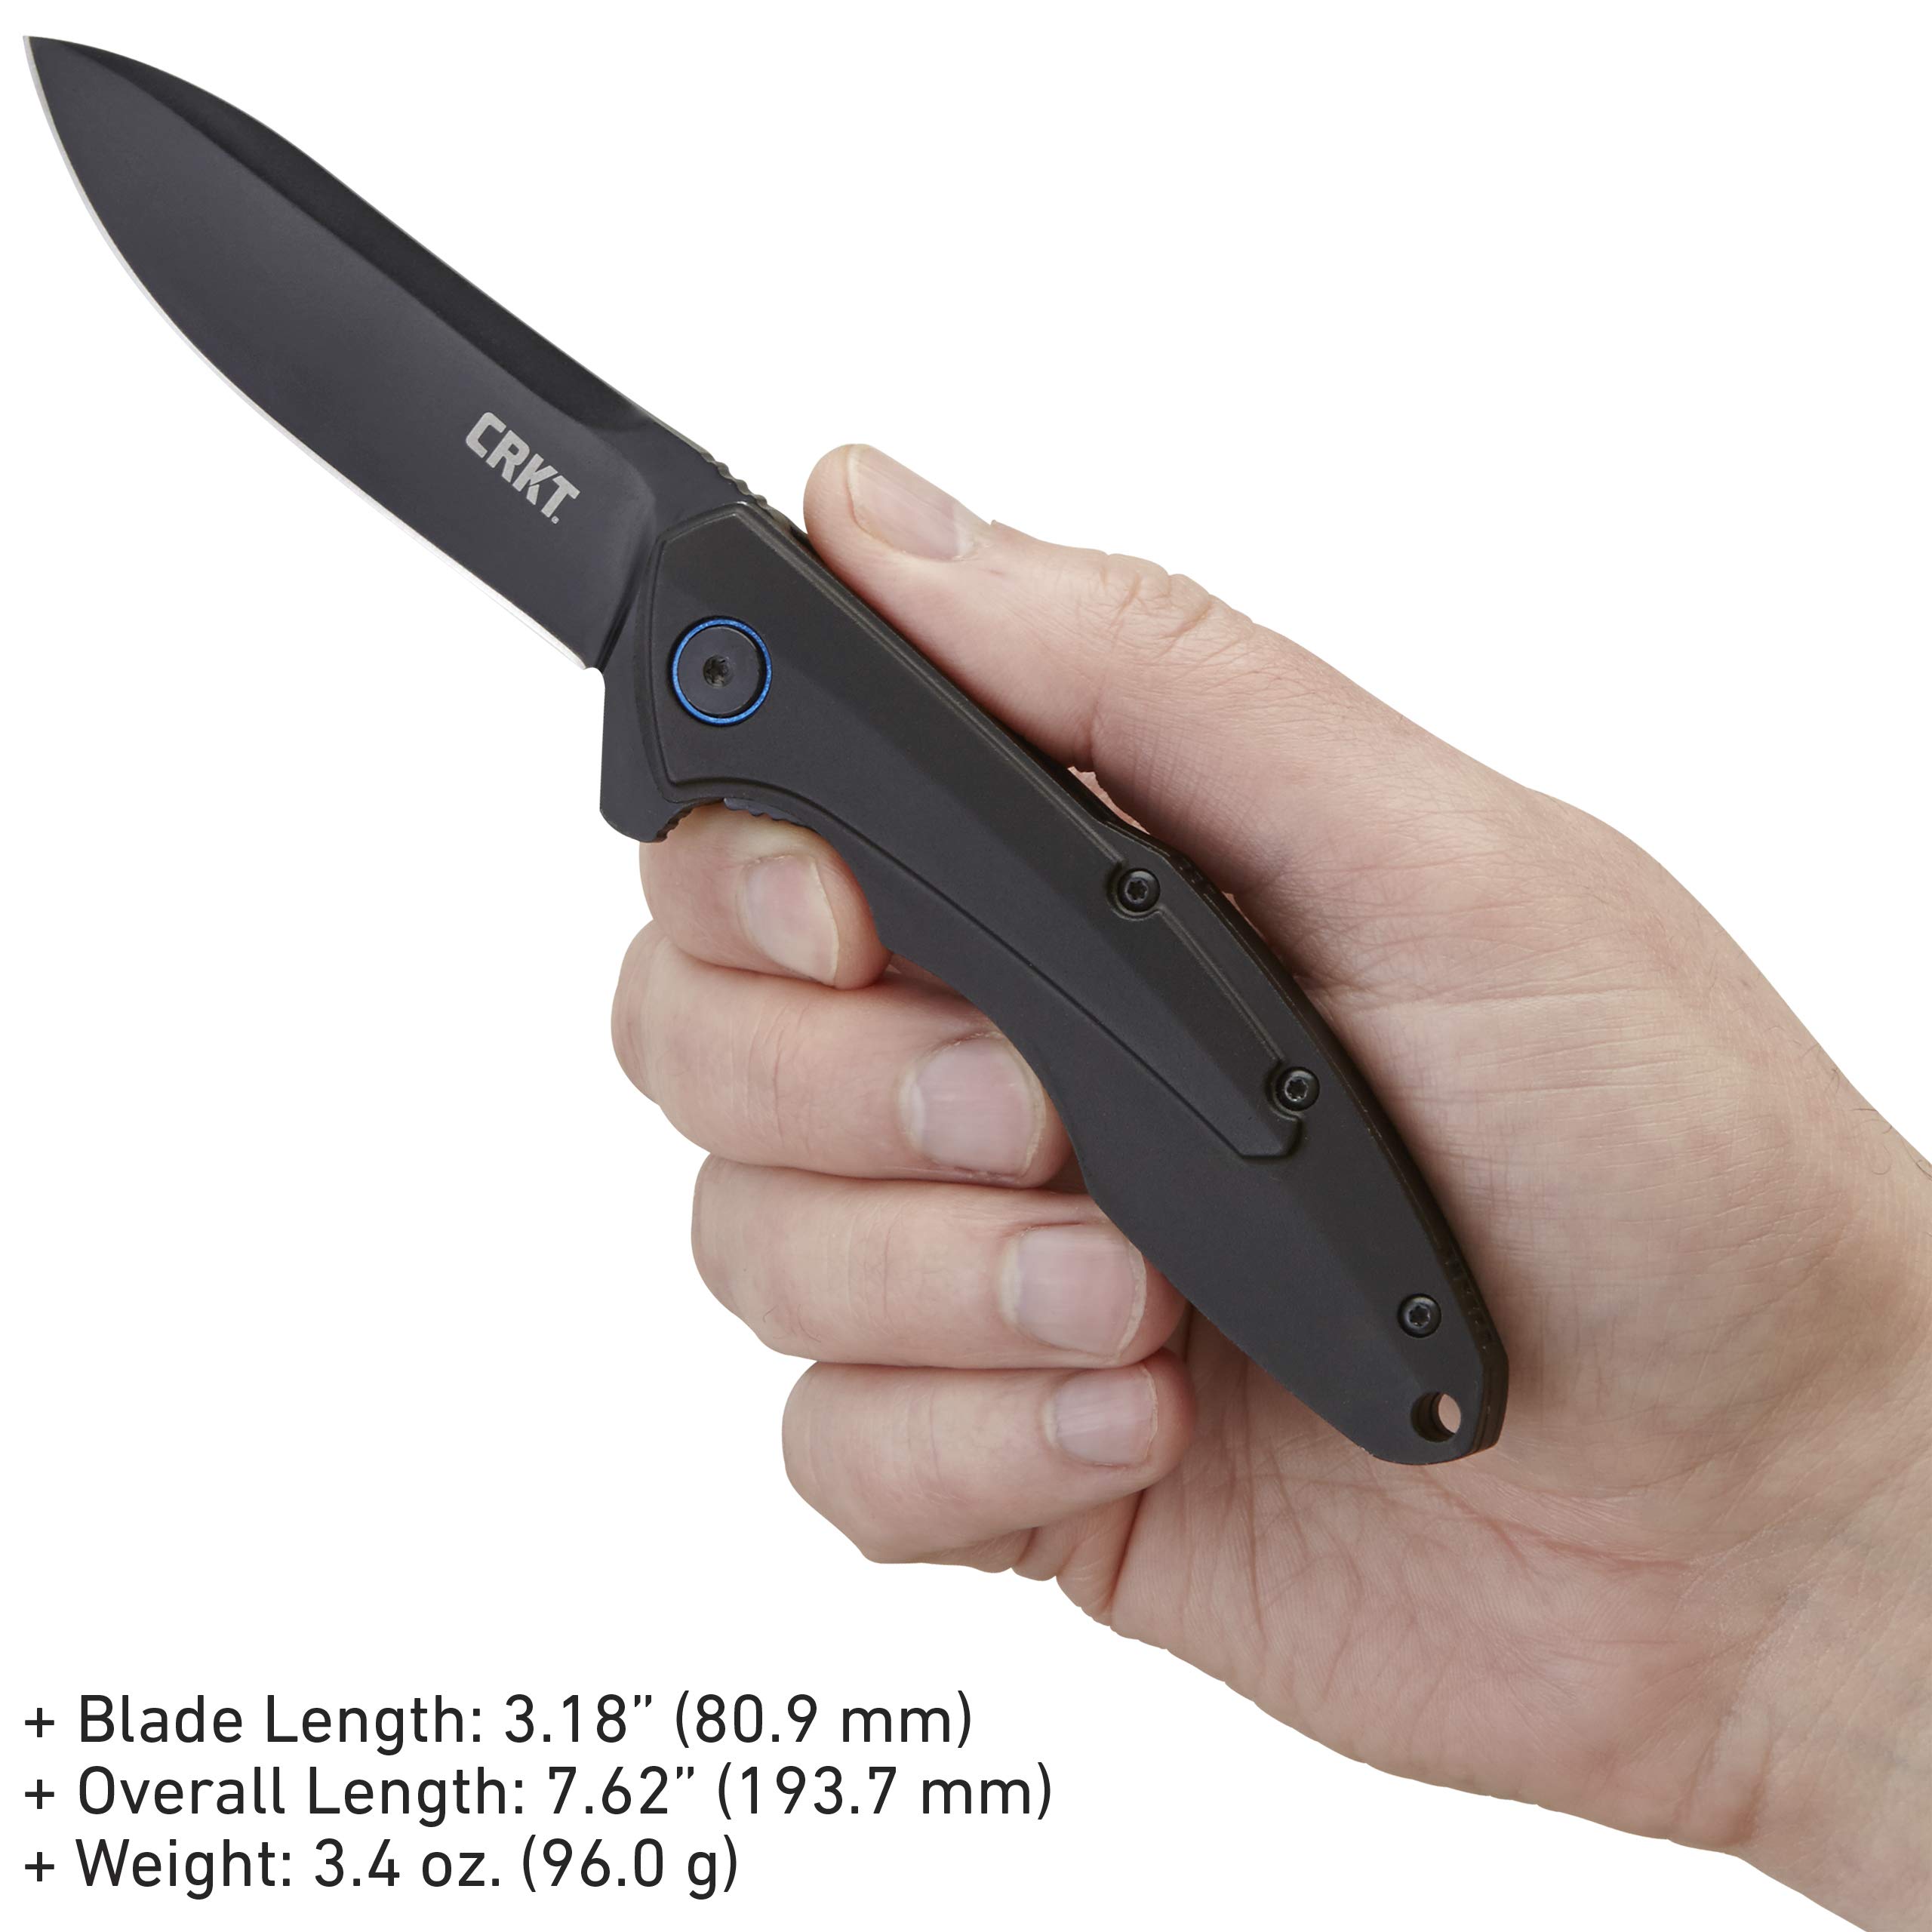 CRKT Caligo Folding Pocket Knife: Plain Edge Folder with Liner Lock, Everyday Carry Folded Knife with Flipper Opening, and Black Oxide Blade Finish 6215